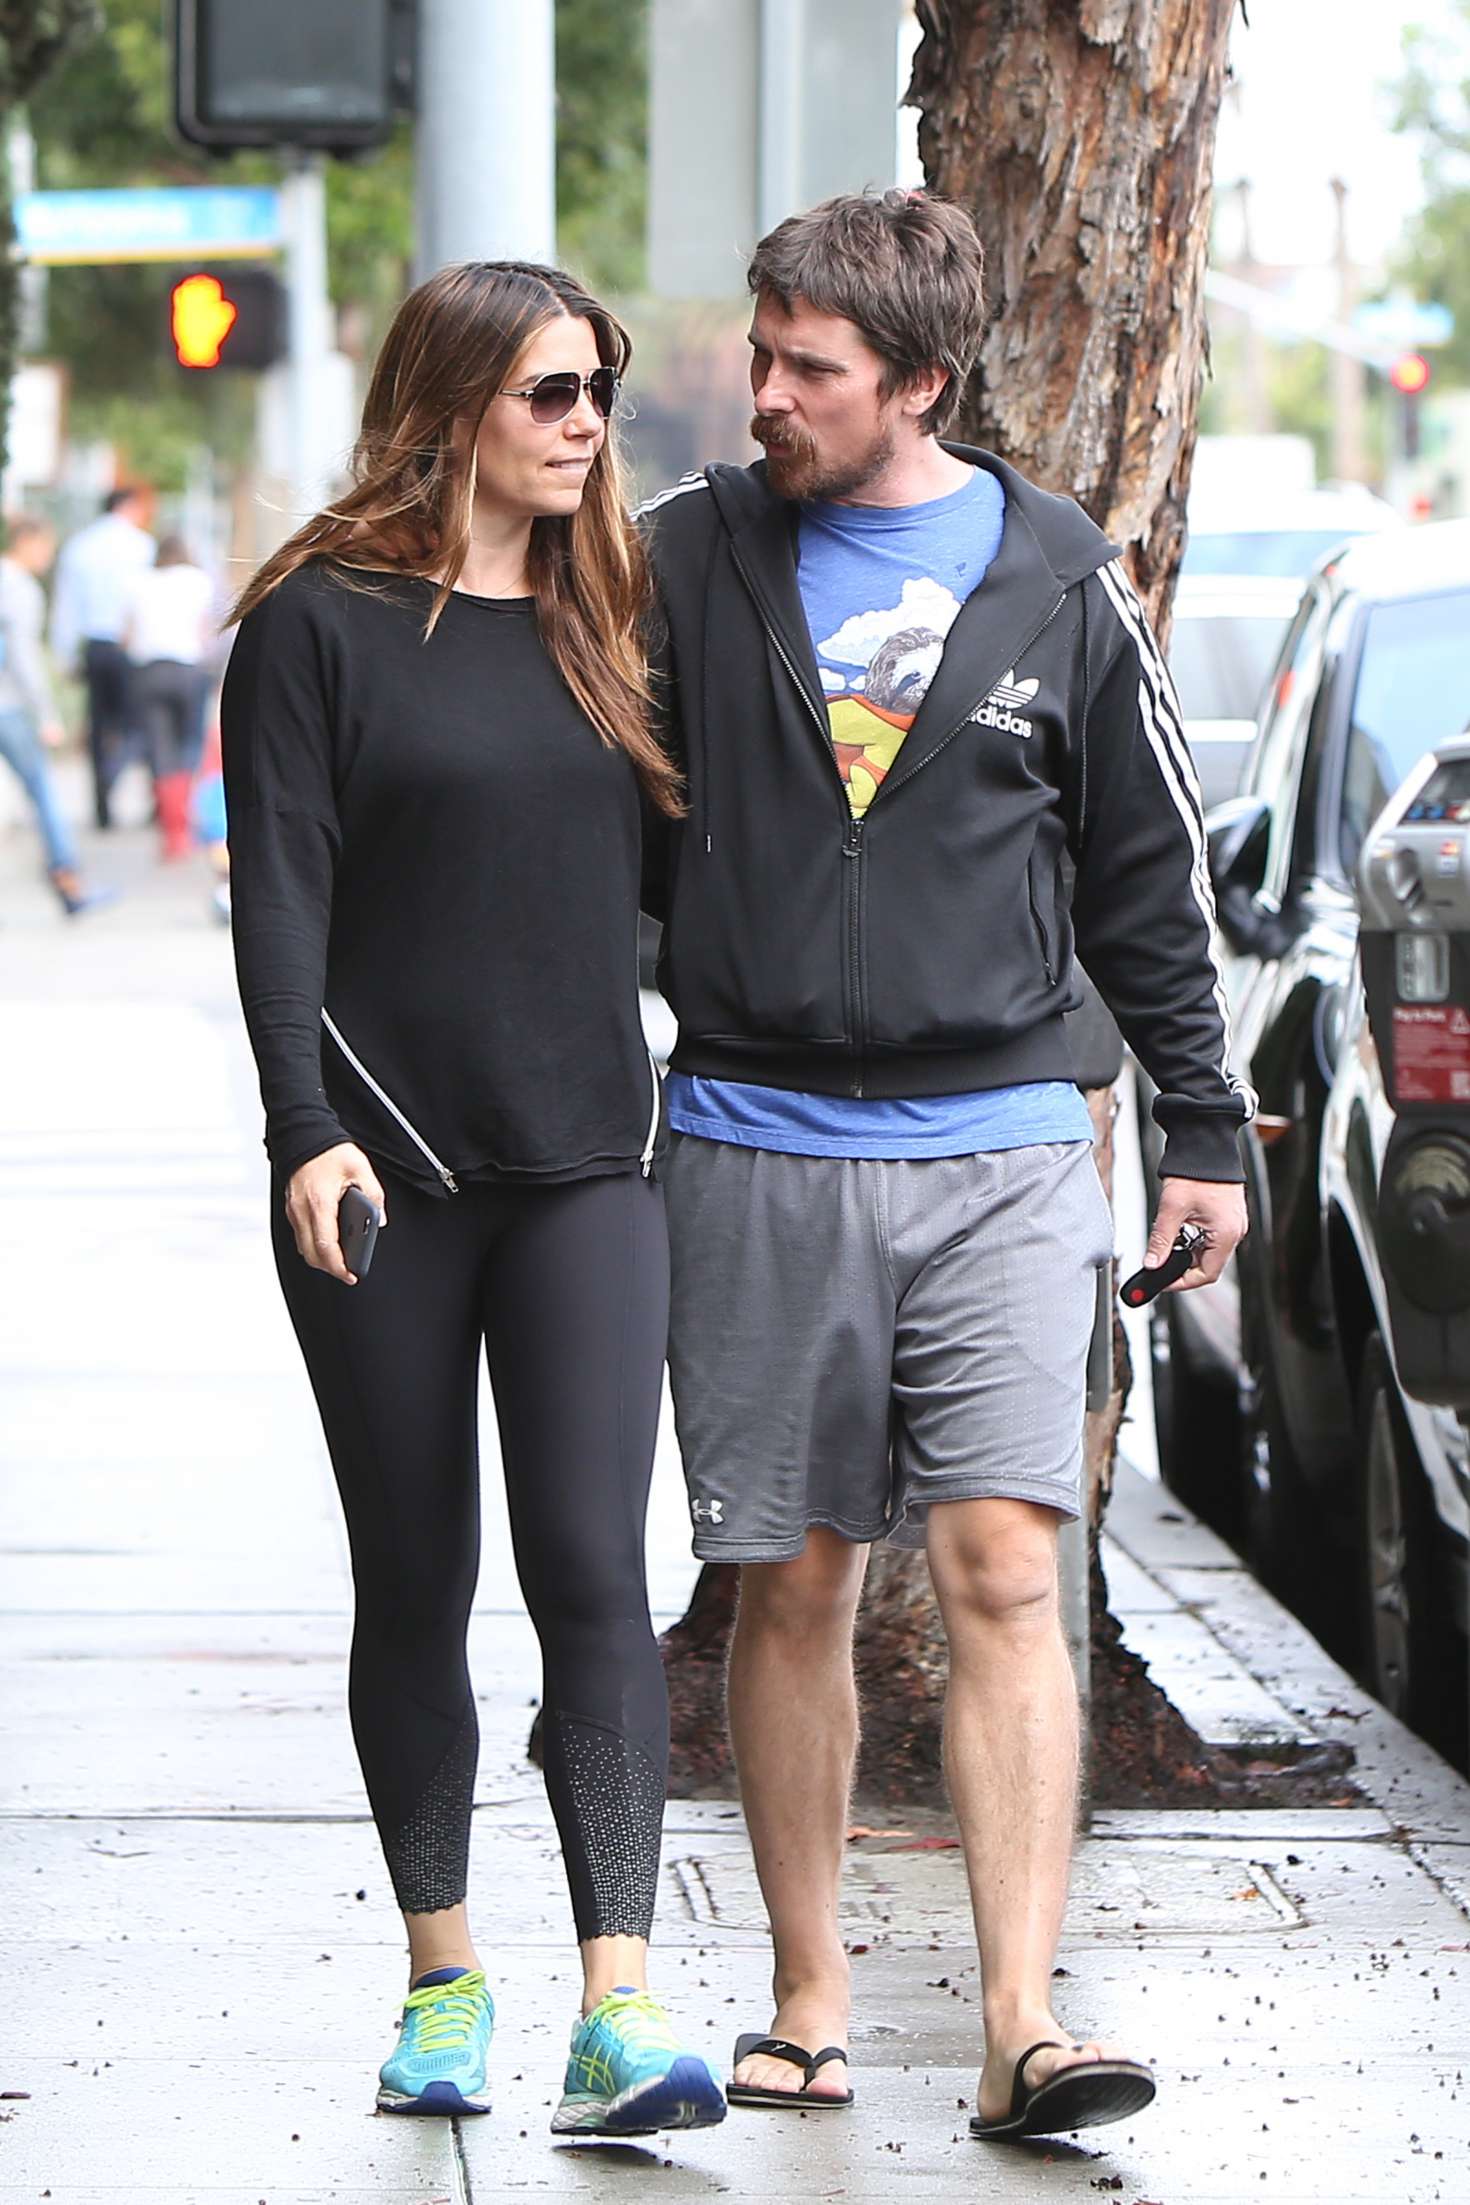 Sibi Blazic and Christian Bale out in Santa Monica -19 | GotCeleb